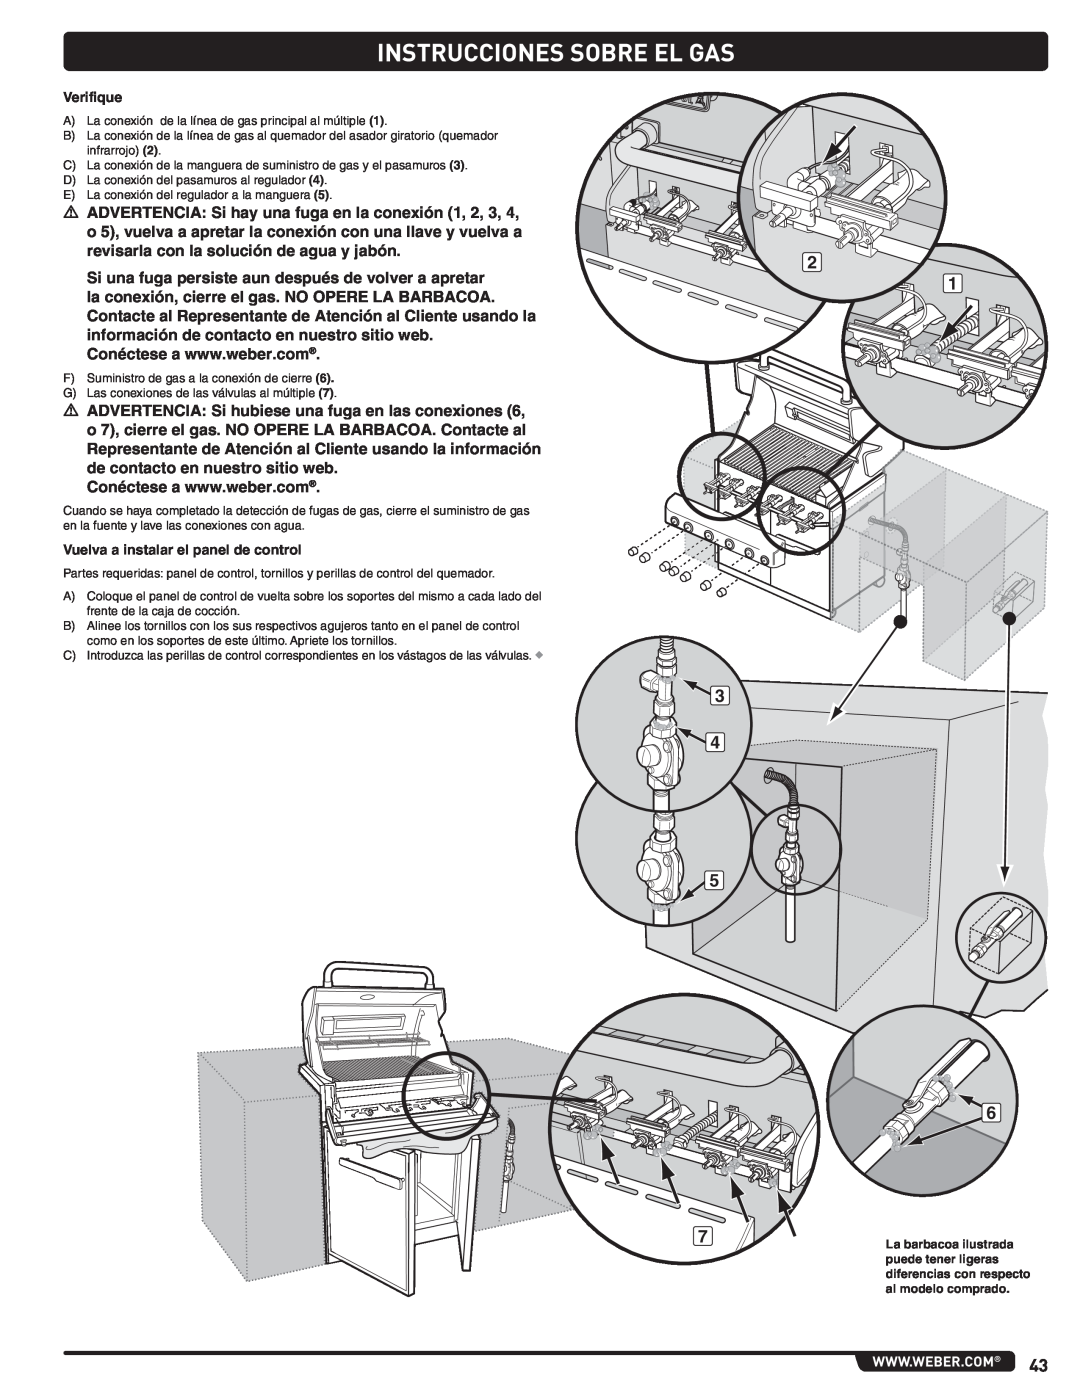 Weber 56576 manual Instrucciones Sobre El Gas, Verifique, Vuelva a instalar el panel de control, La barbacoa ilustrada 